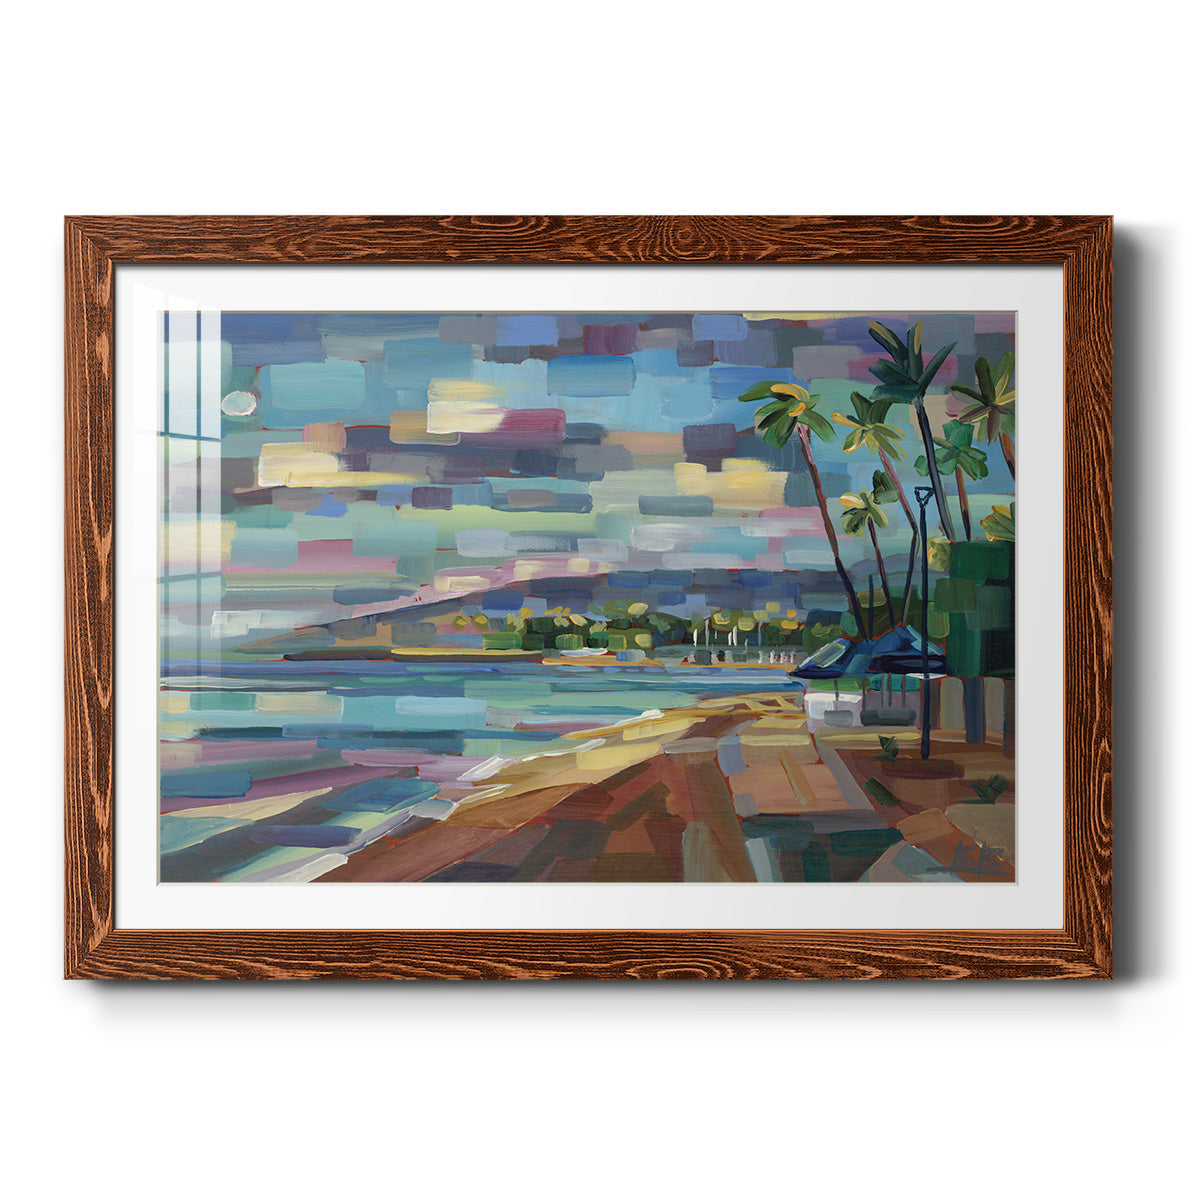 Morning Moon Over Waikiki-Premium Framed Print - Ready to Hang